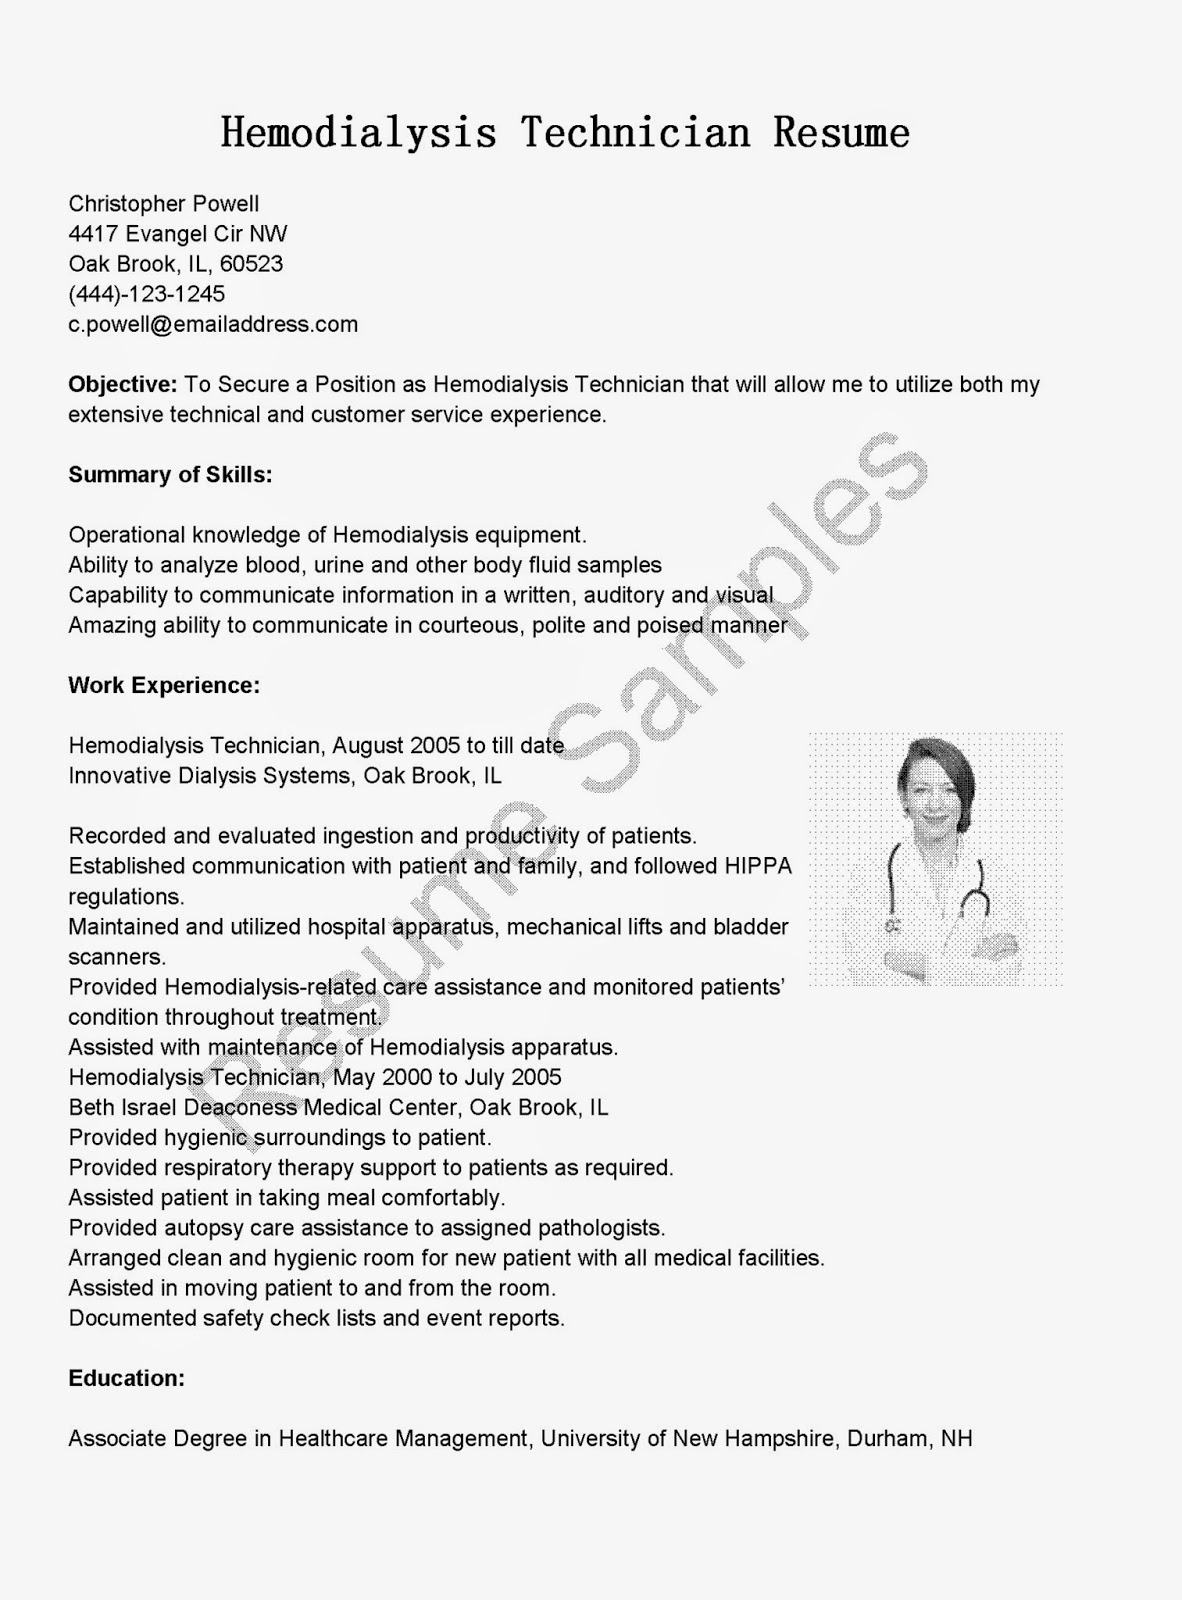 Utility technician resume